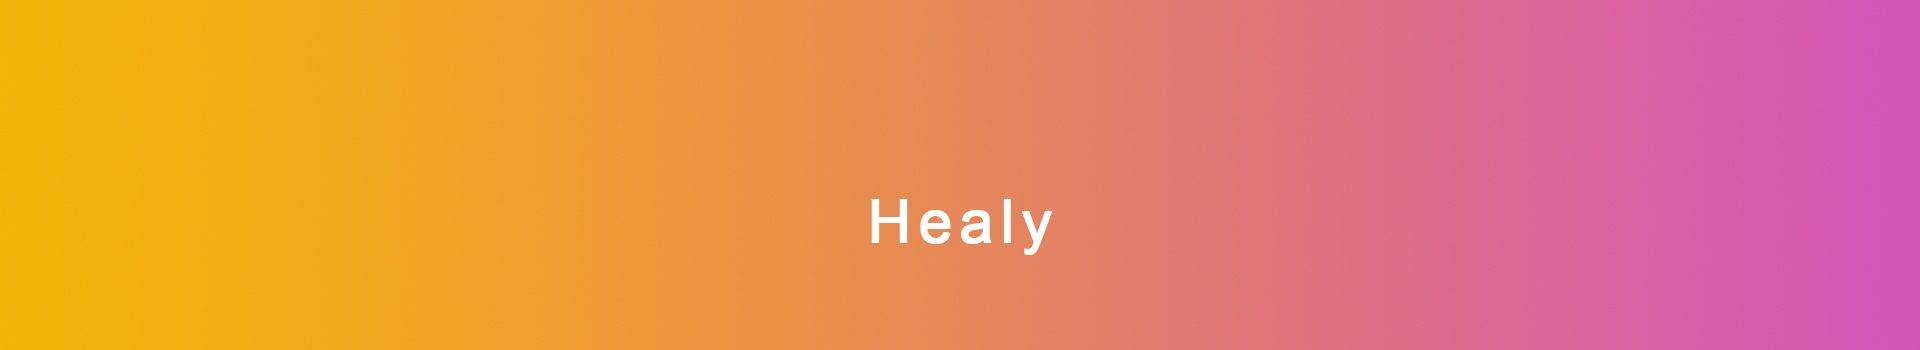 Healy